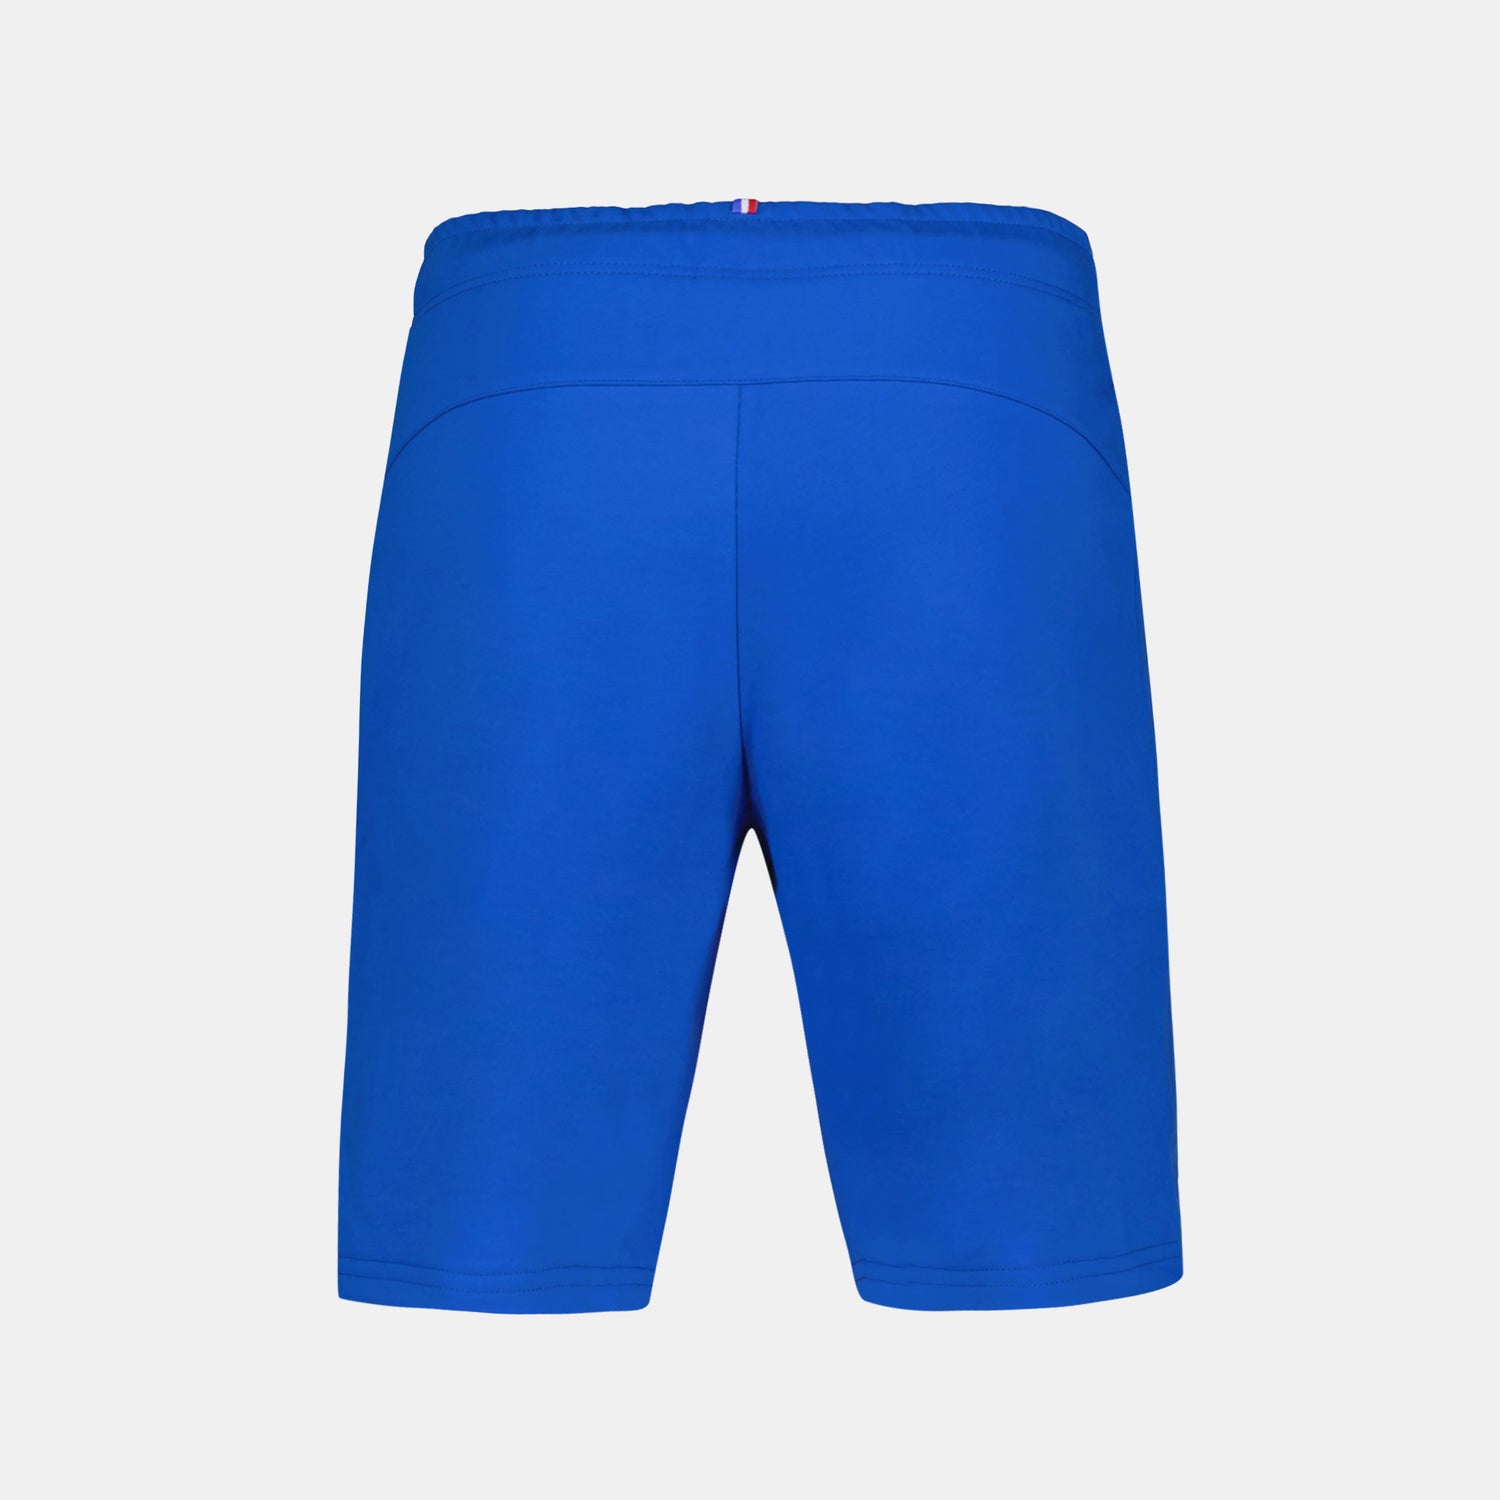 2410259-BAS Short N°1 M lapis blue/n.o.w | Short Homme